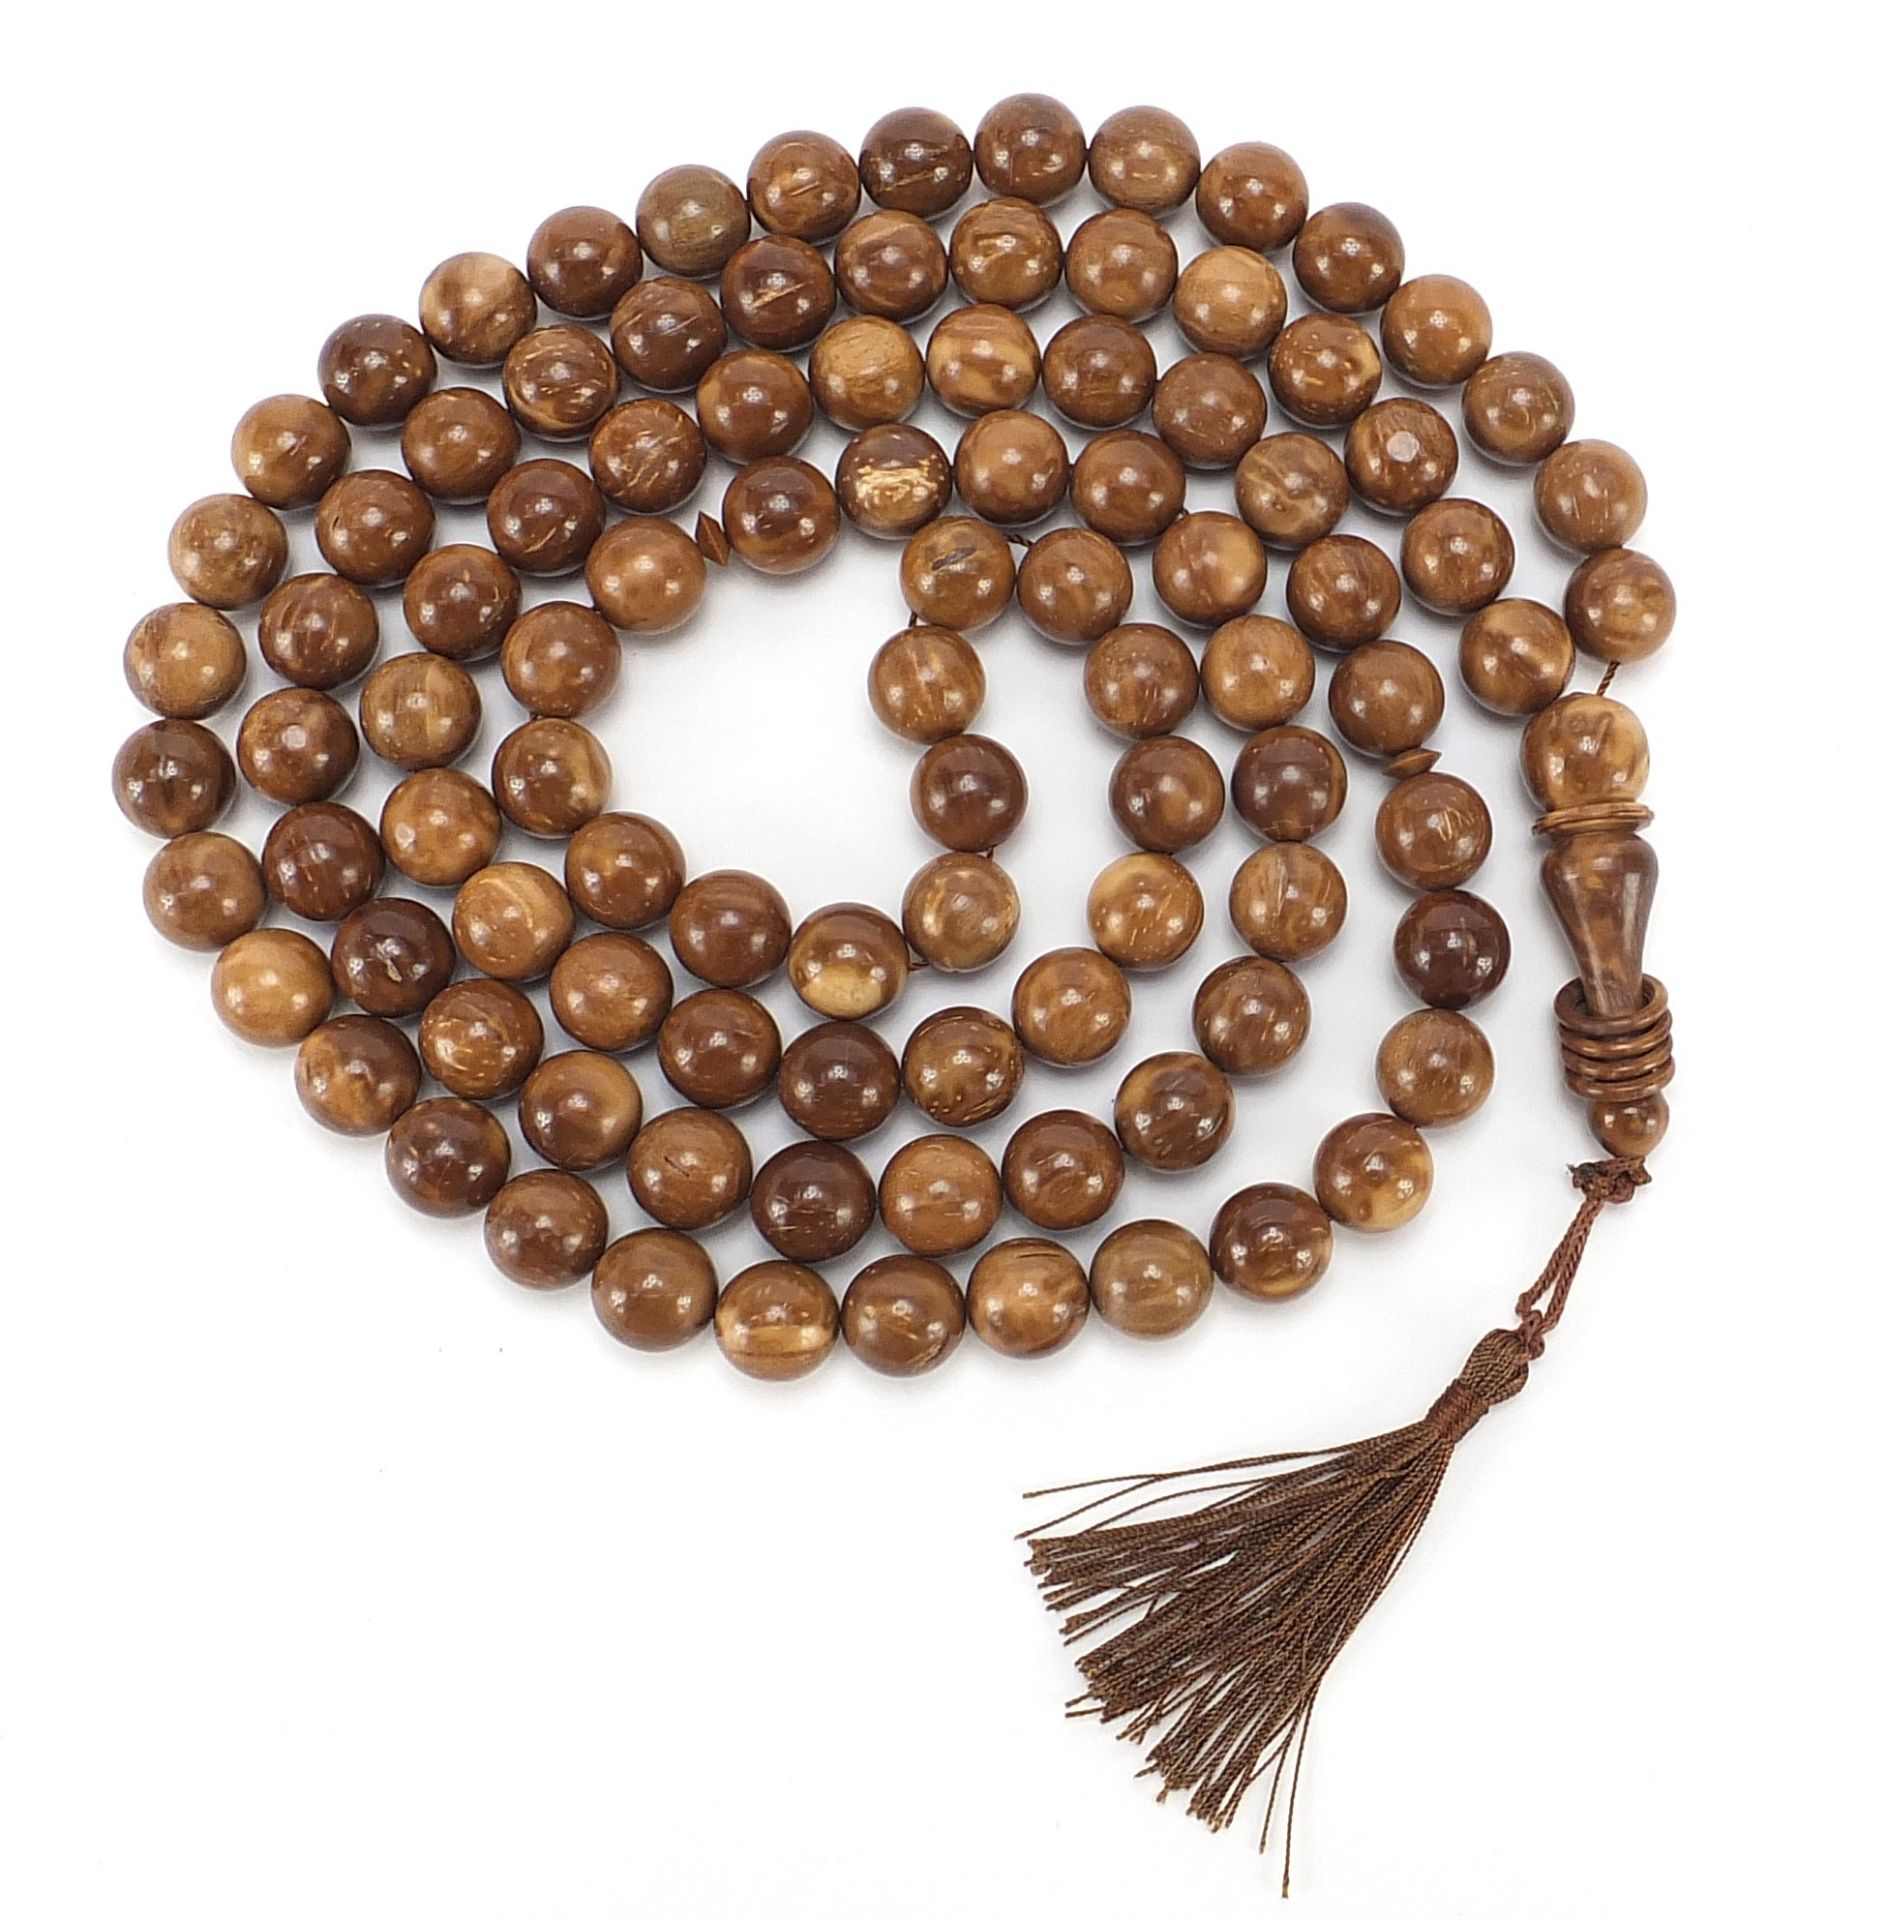 Turkish Islamic Tesbih prayer beads, 165cm in length - Image 2 of 2